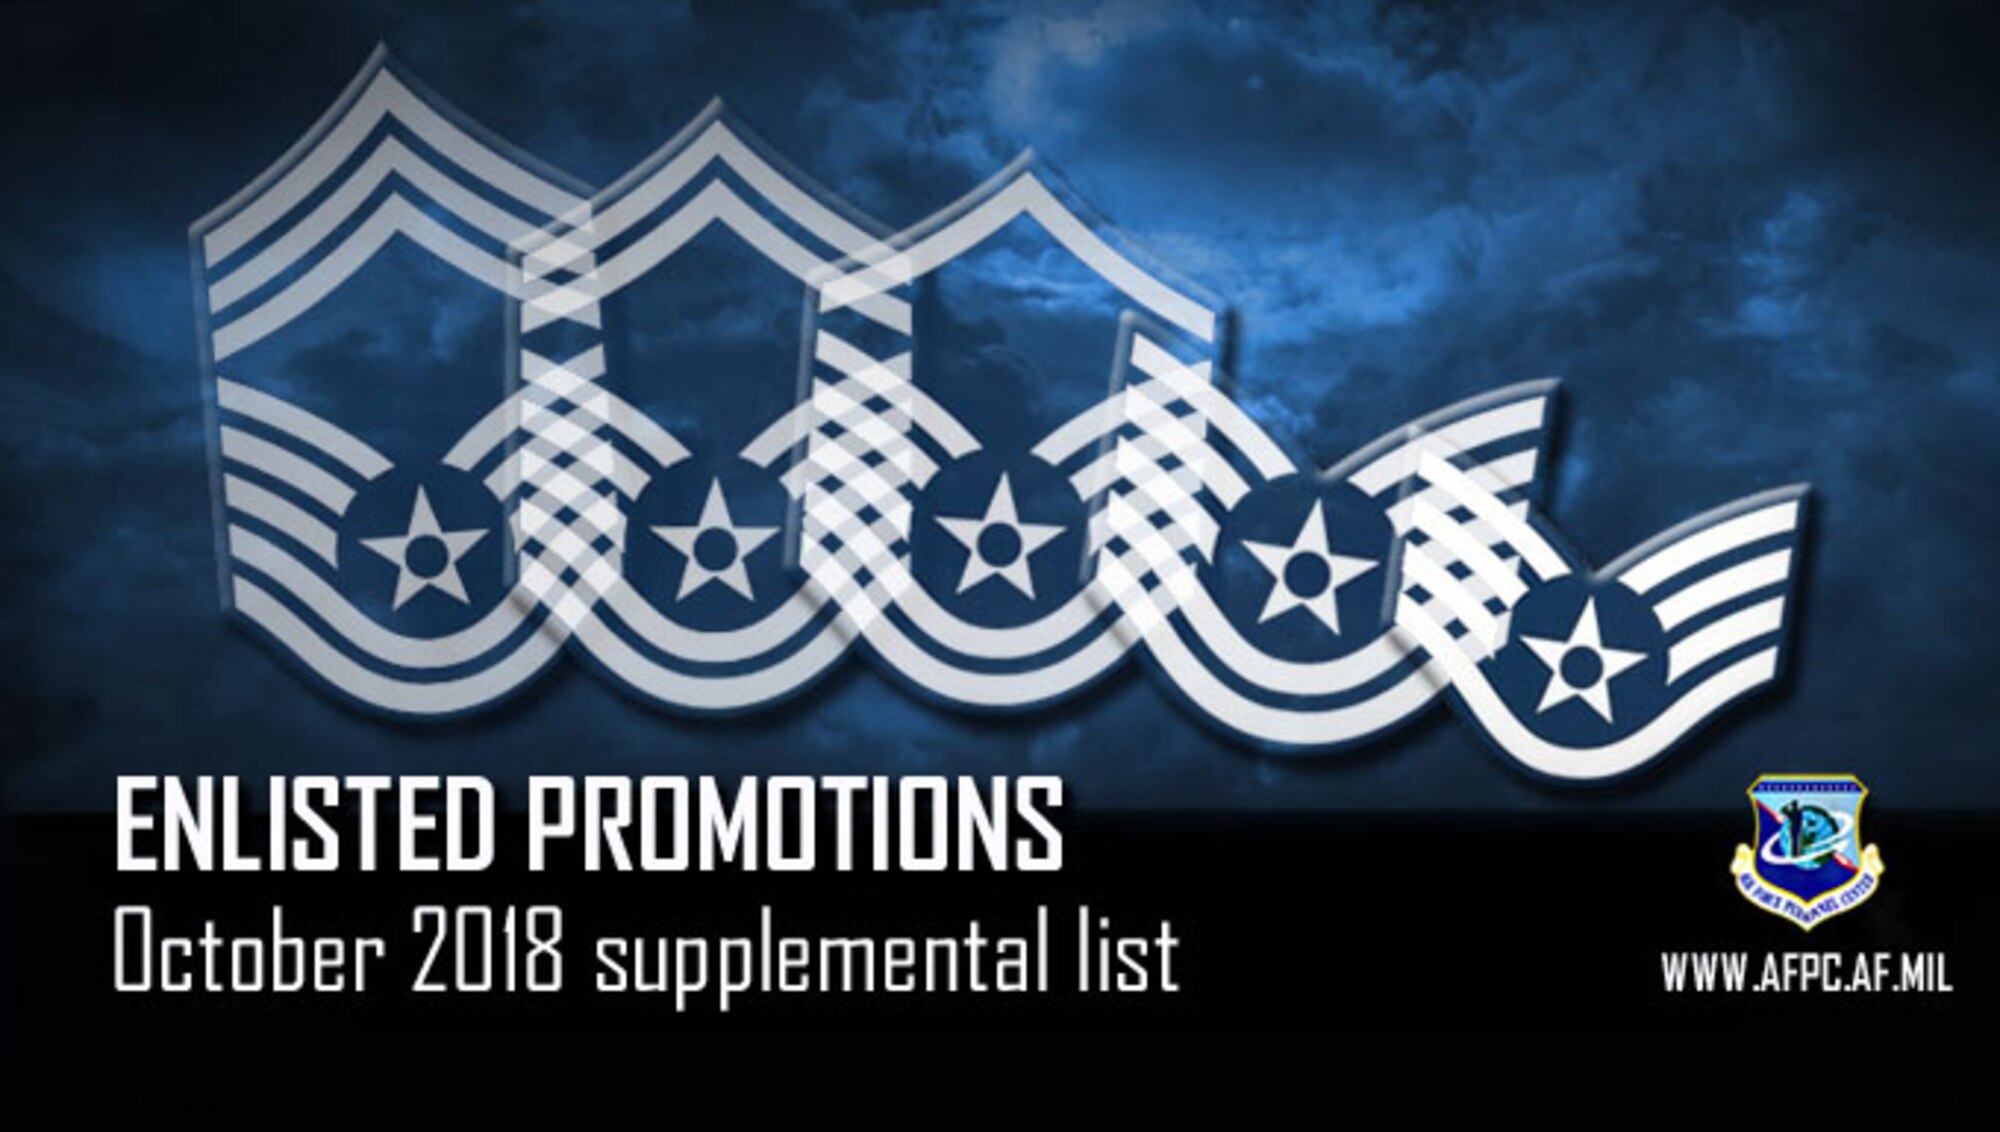 Enlisted promotions; October 2018 supplemental list